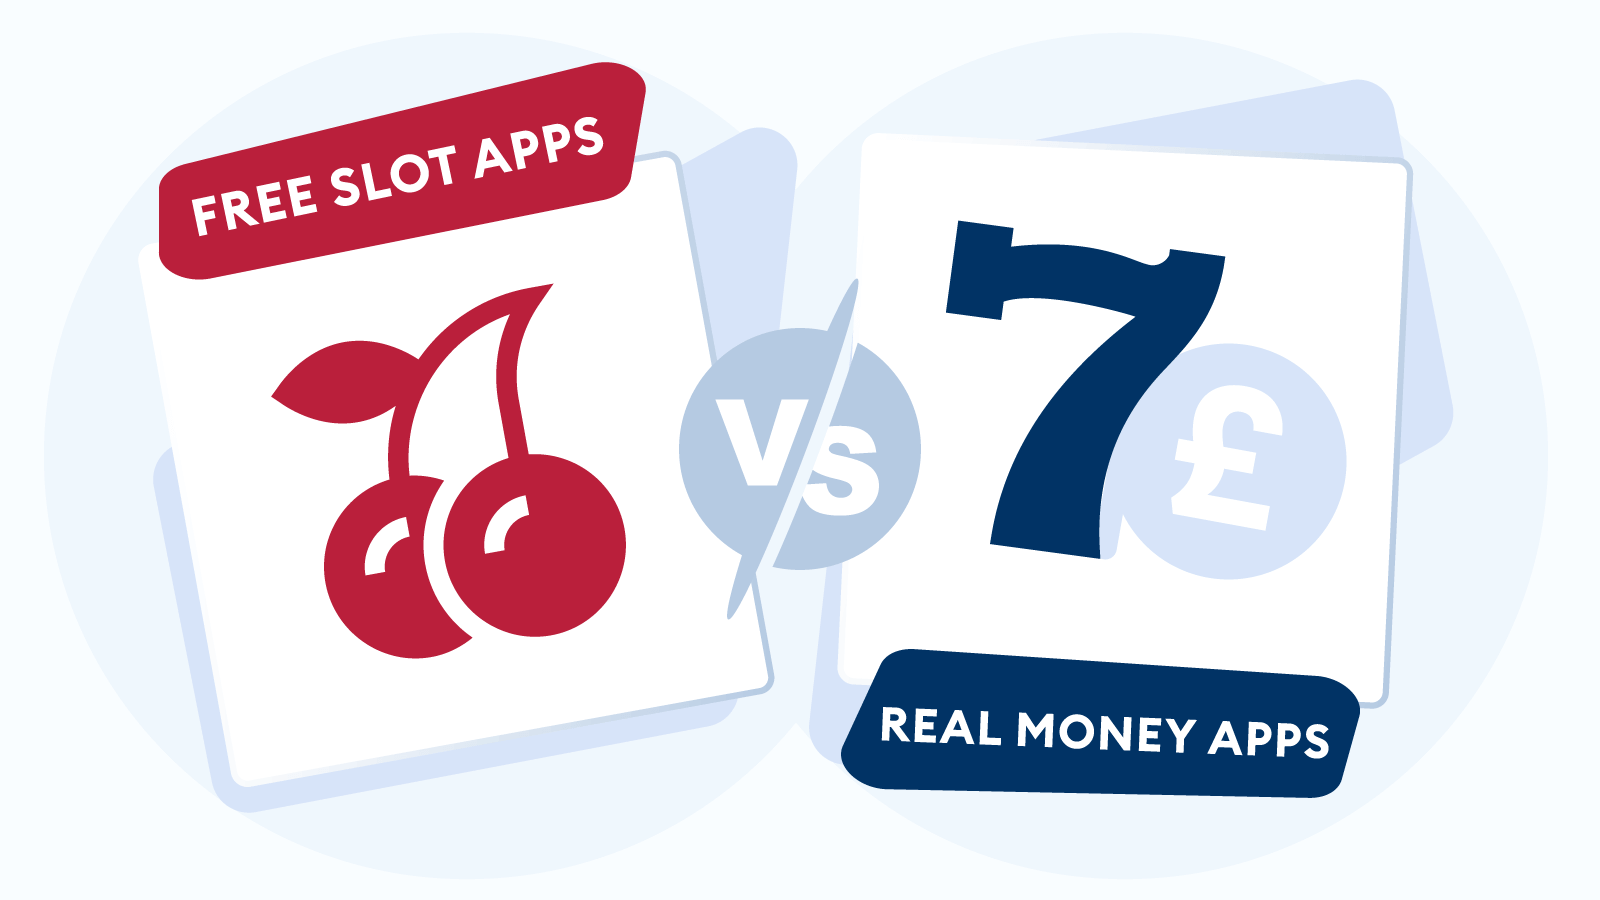 Free Slot Apps vs Real Money Apps